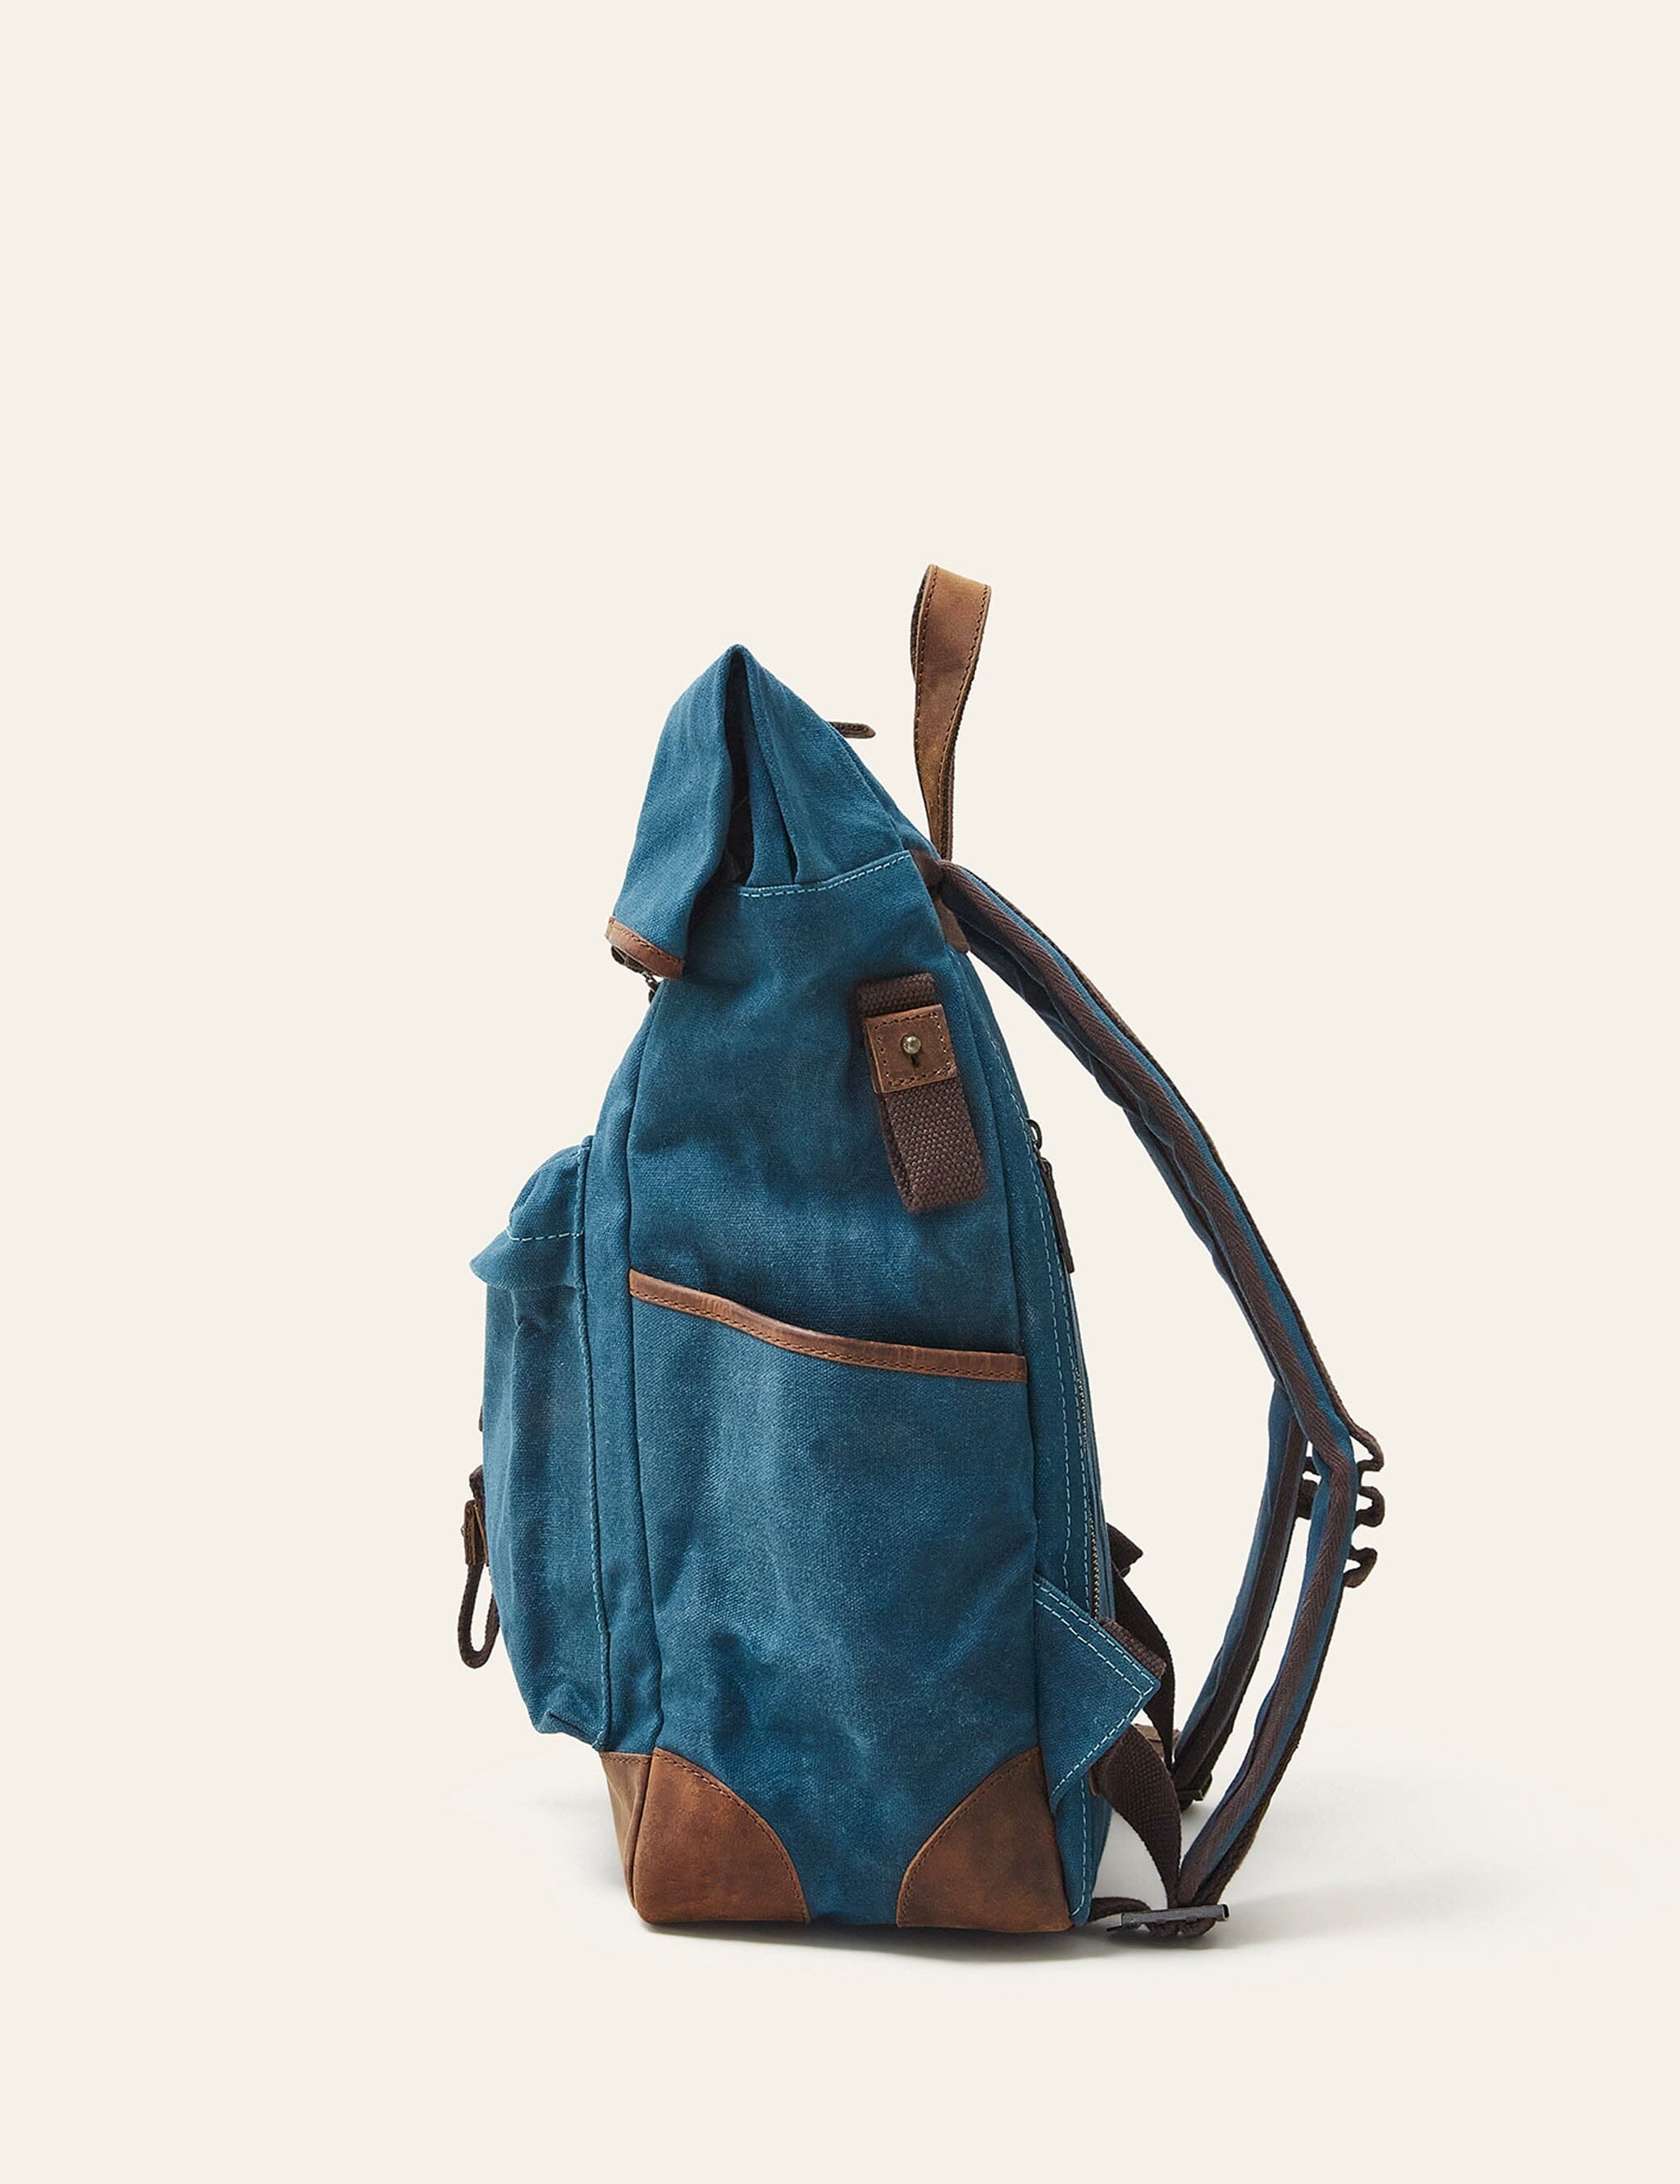 teal-sri-lanka-waxed-cotton-backpack-451986.jpg